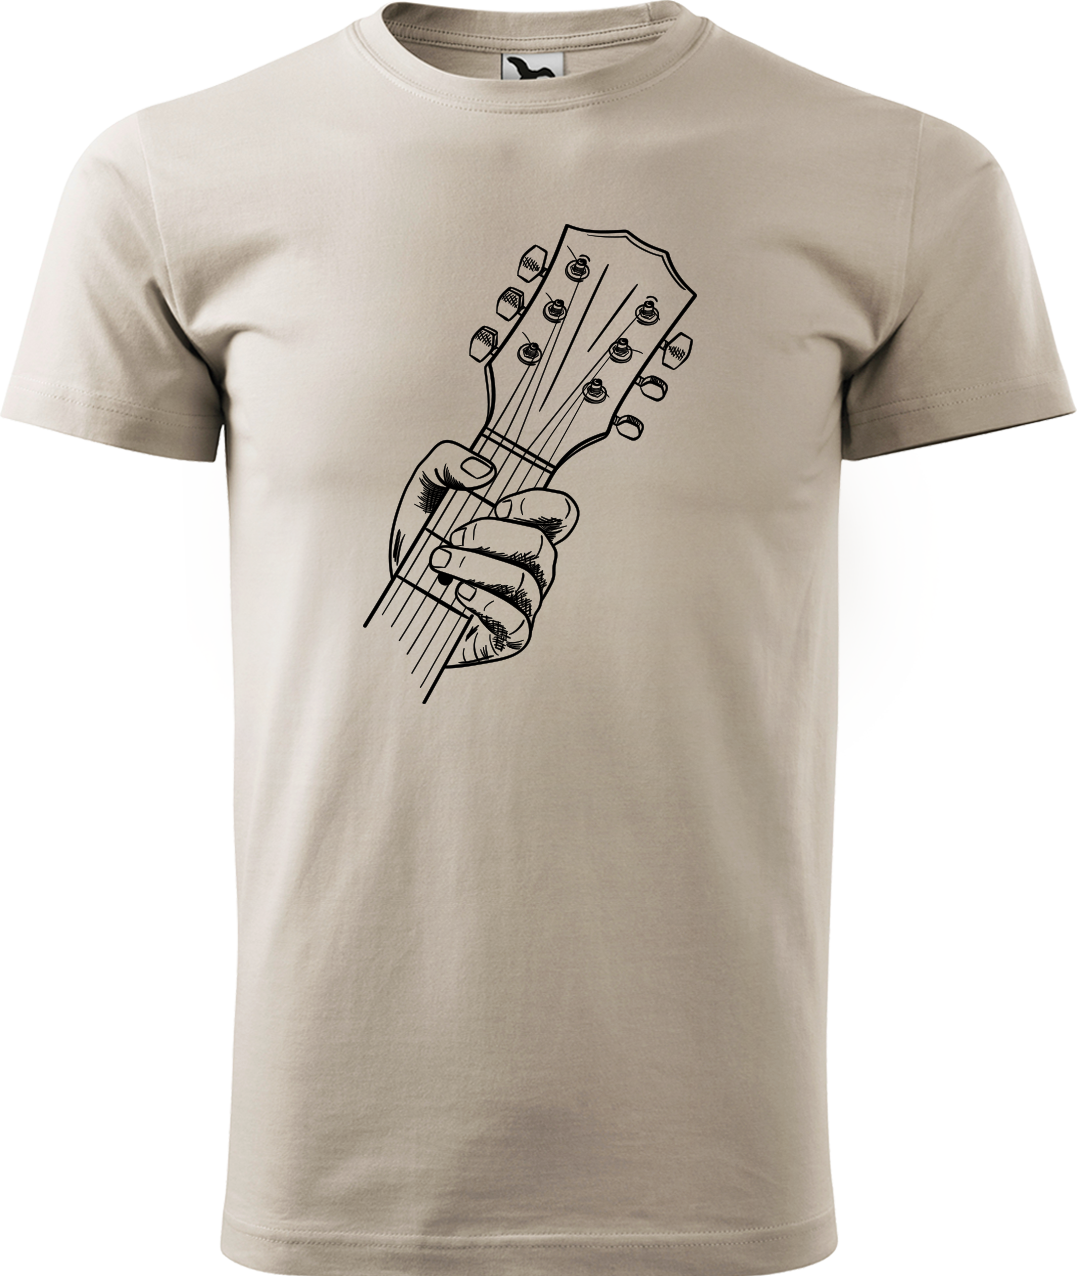 Pánské tričko s kytarou - Hlava kytary Velikost: 4XL, Barva: Béžová (51)